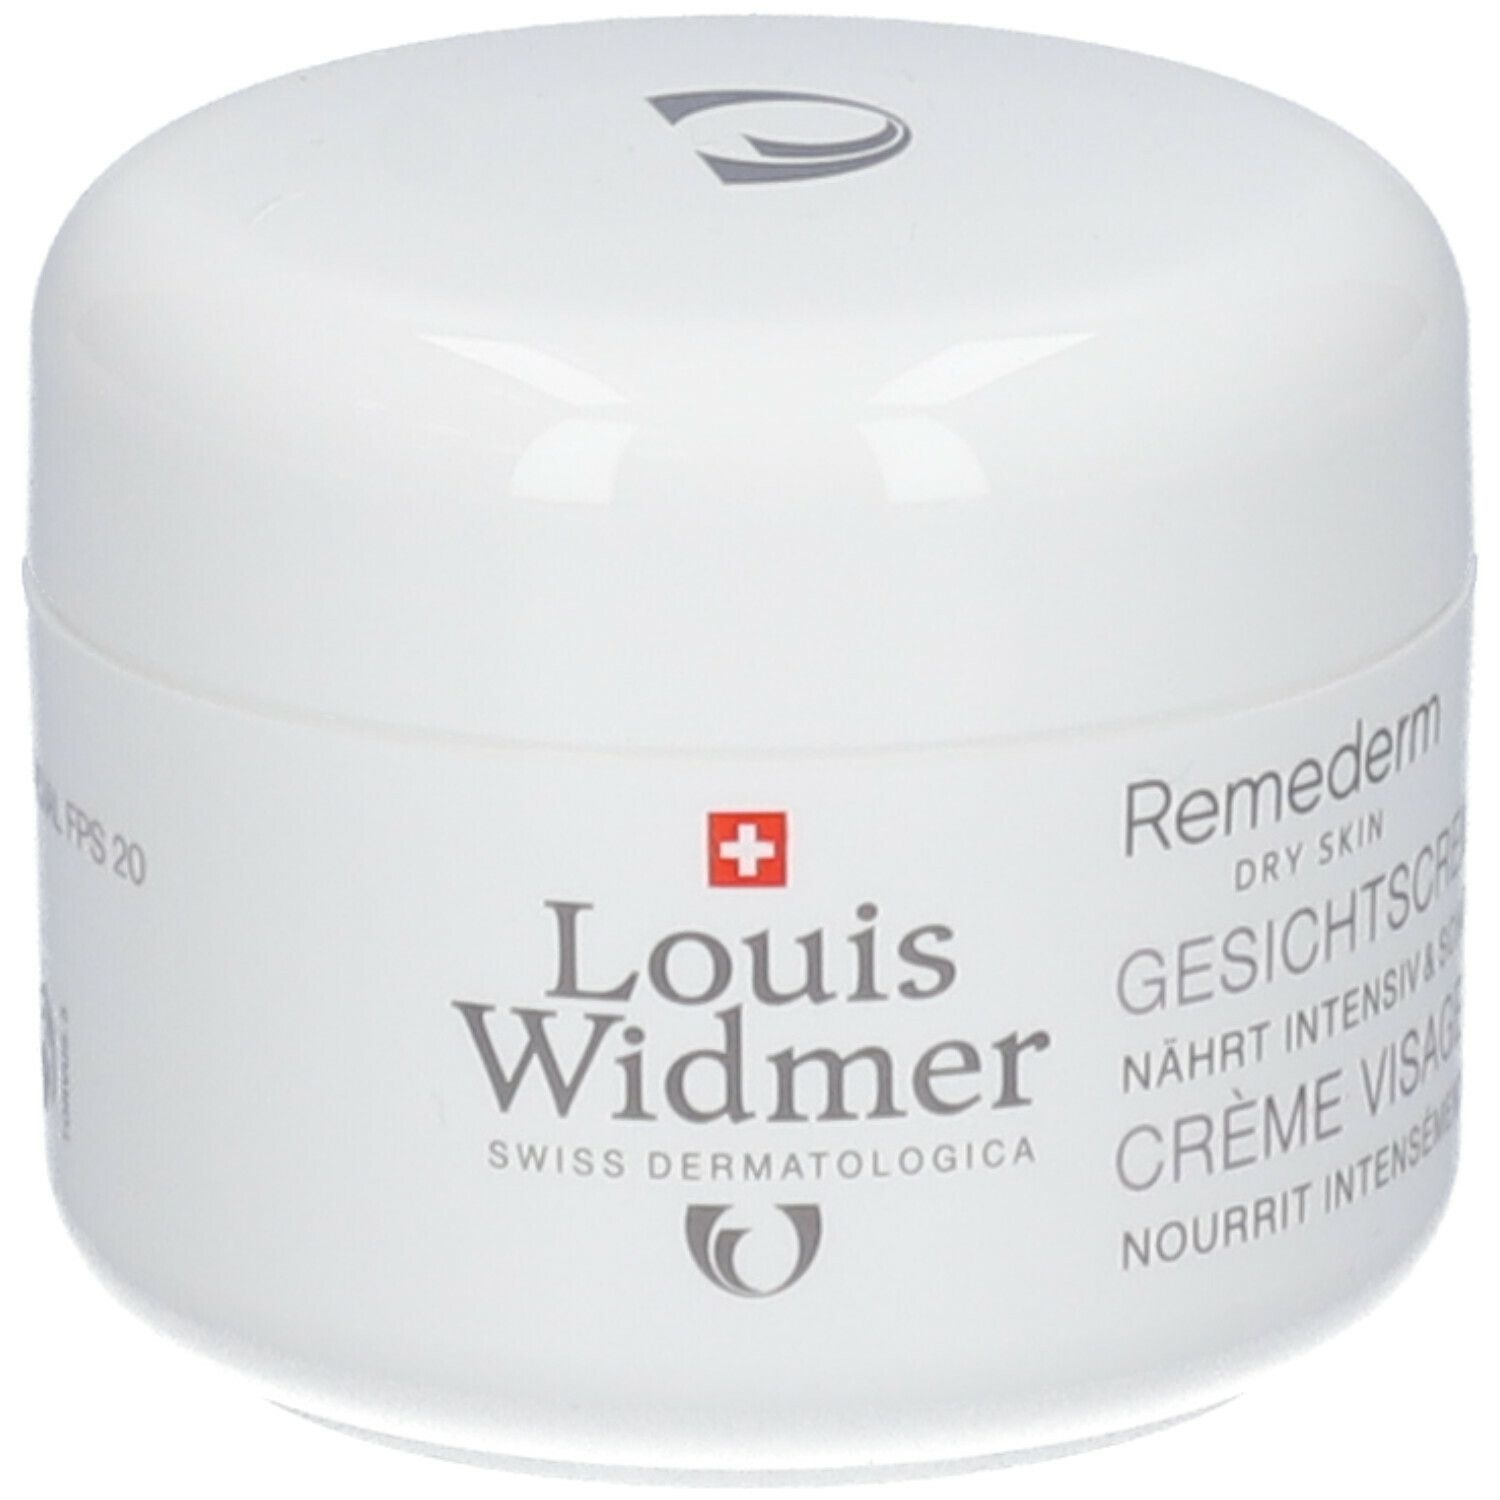 Louis Widmer Remederm Face UV20 Leggermente Profumata